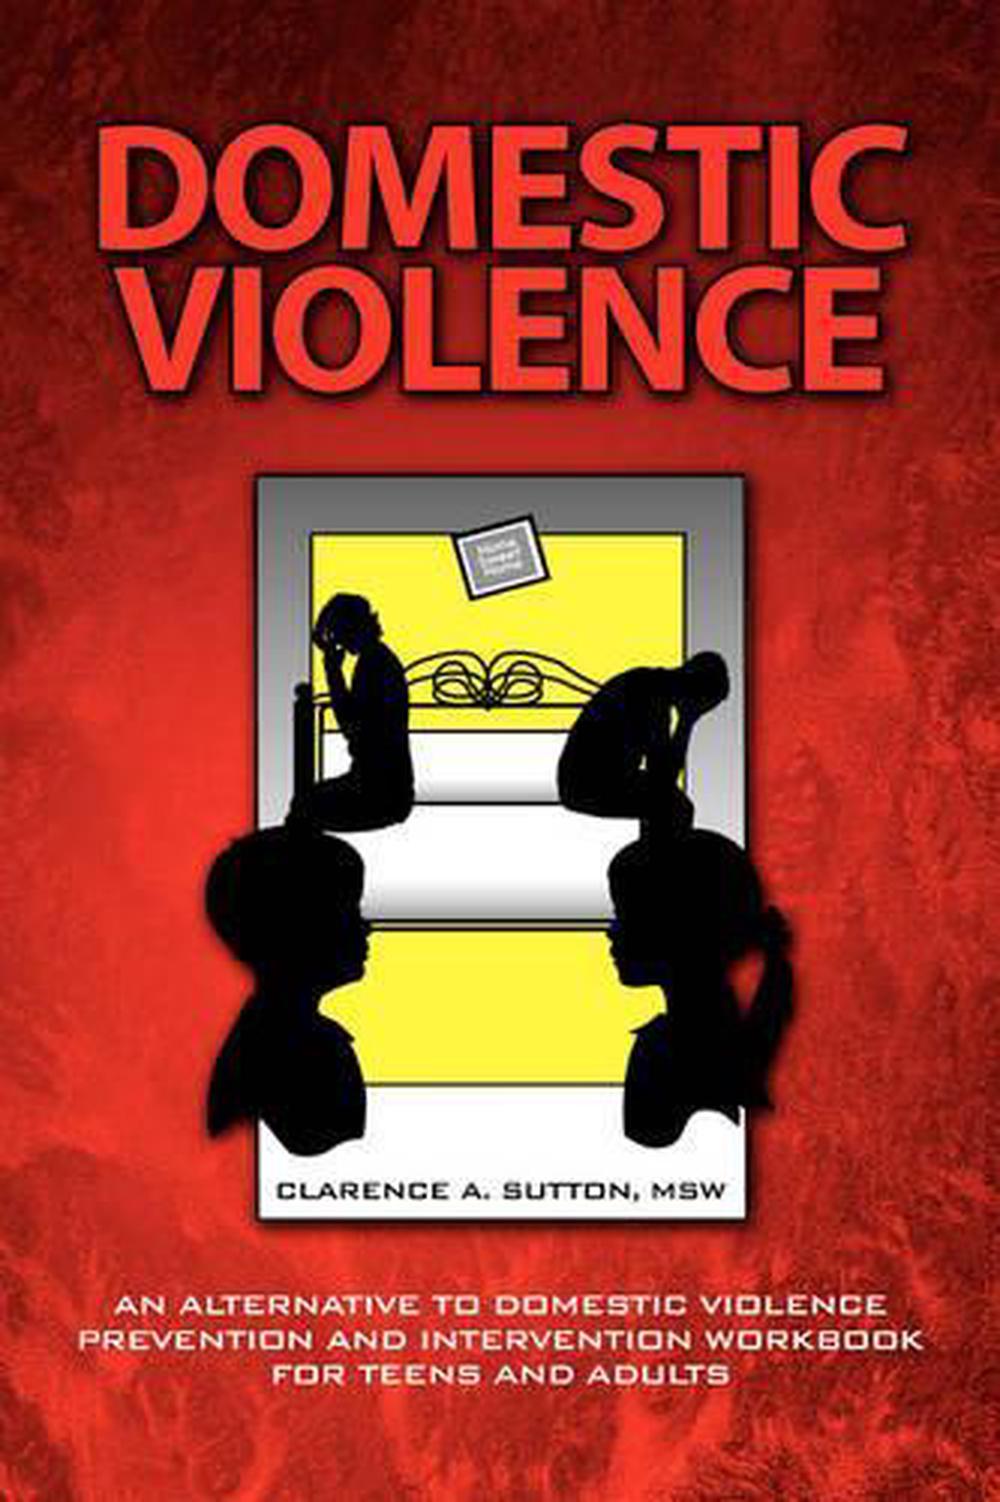 a history of violence book mallory fox